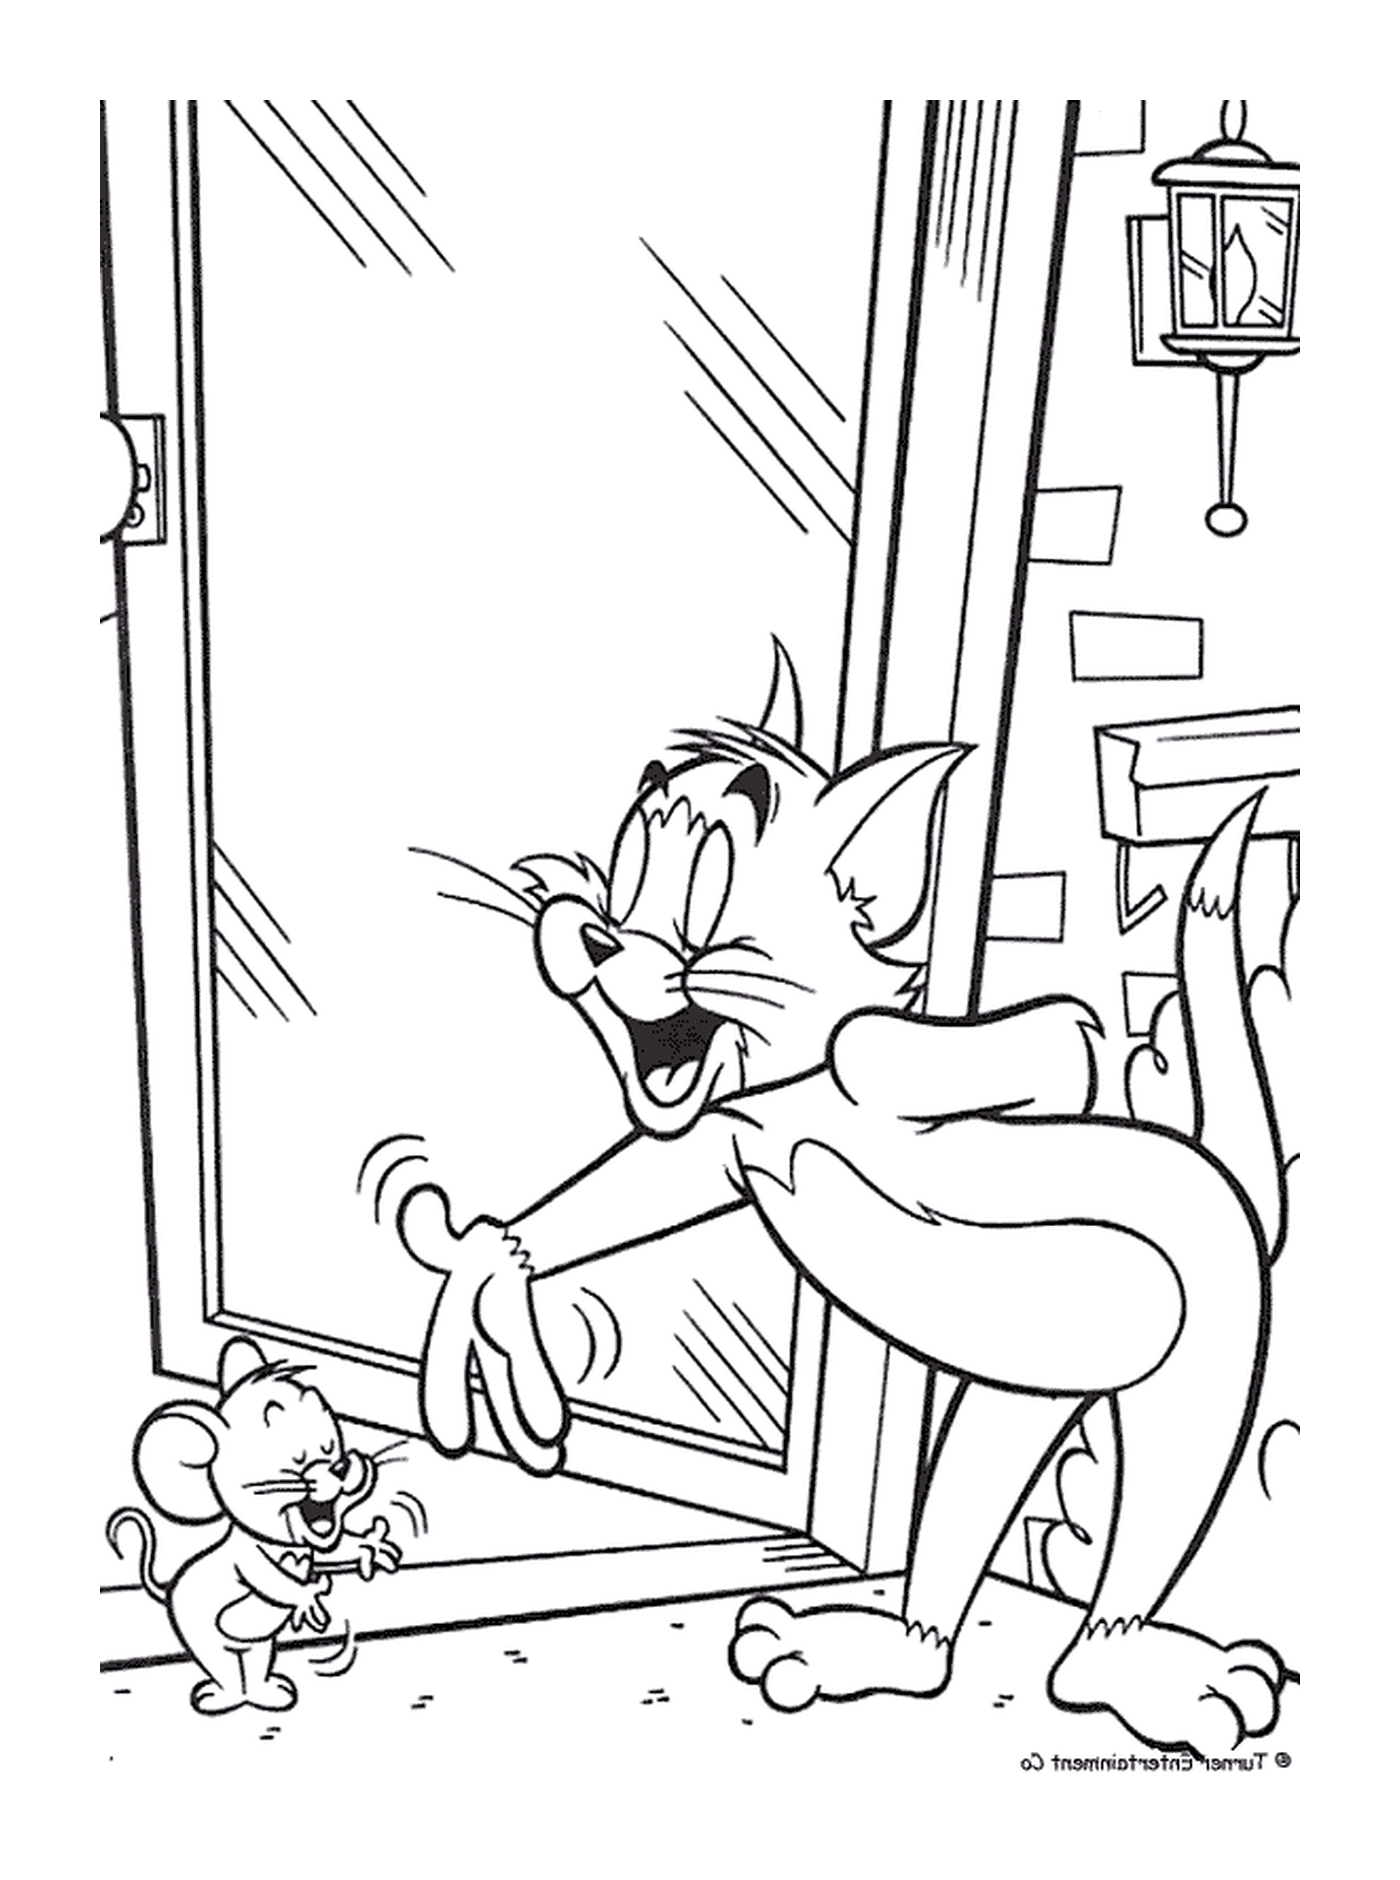  Tom e Jerry si salutano 